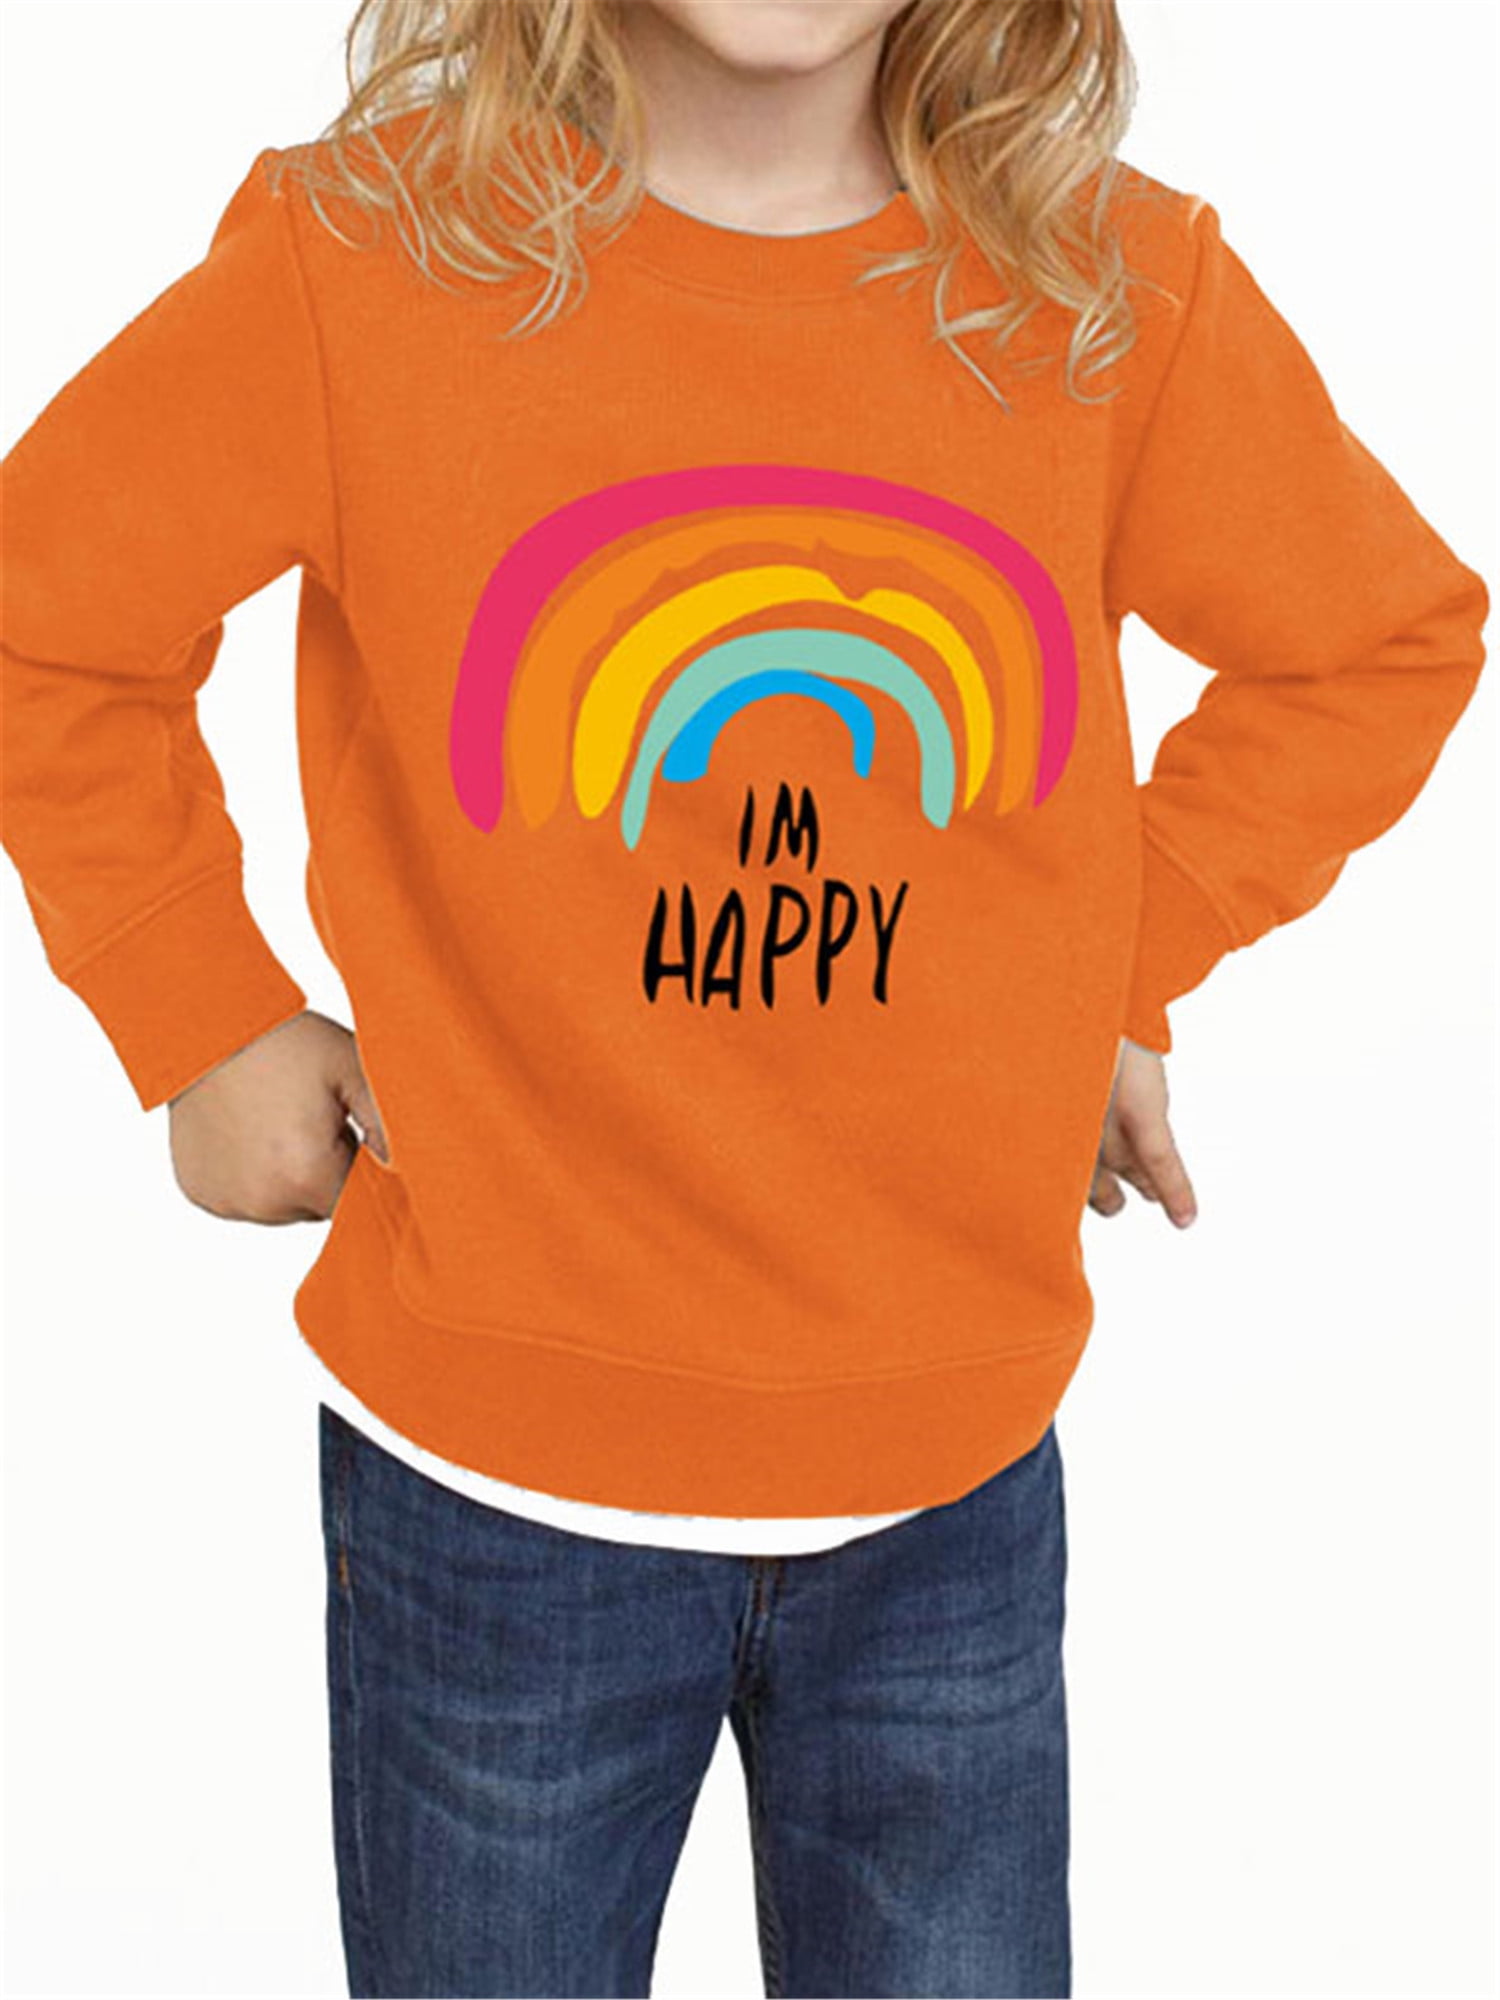 Unisex Kids Toddler Boy Girl Sweatshirt Crew Neck Pullover Long Sleeve Cotton Casual Top Shirt 